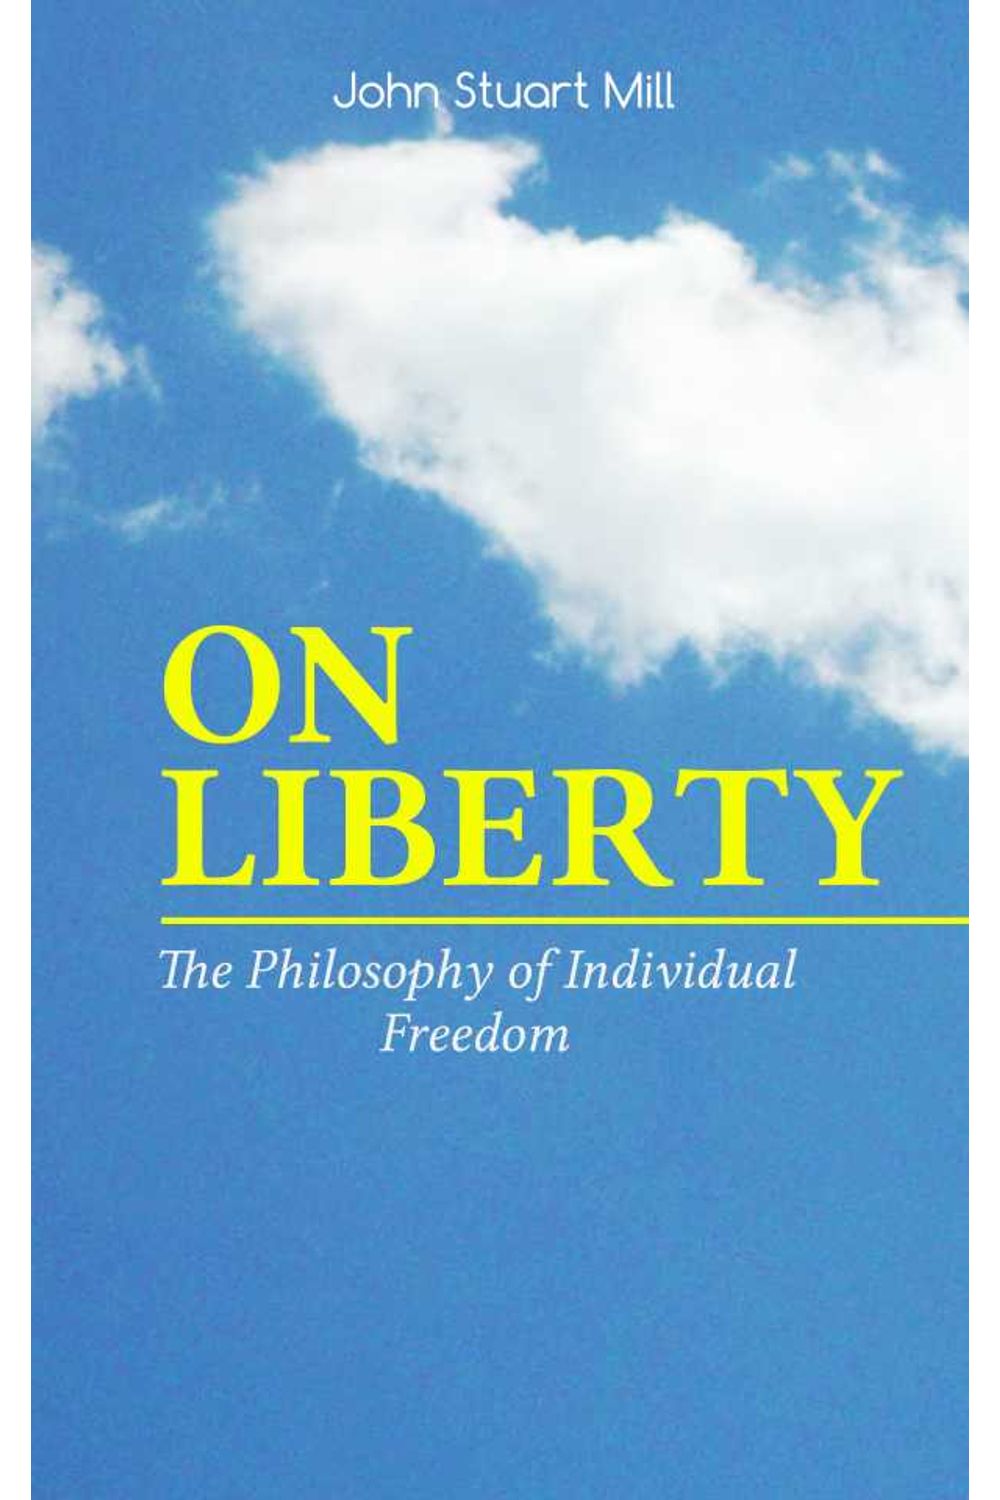 bw-on-liberty-the-philosophy-of-individual-freedom-madison-adams-press-9788026879206